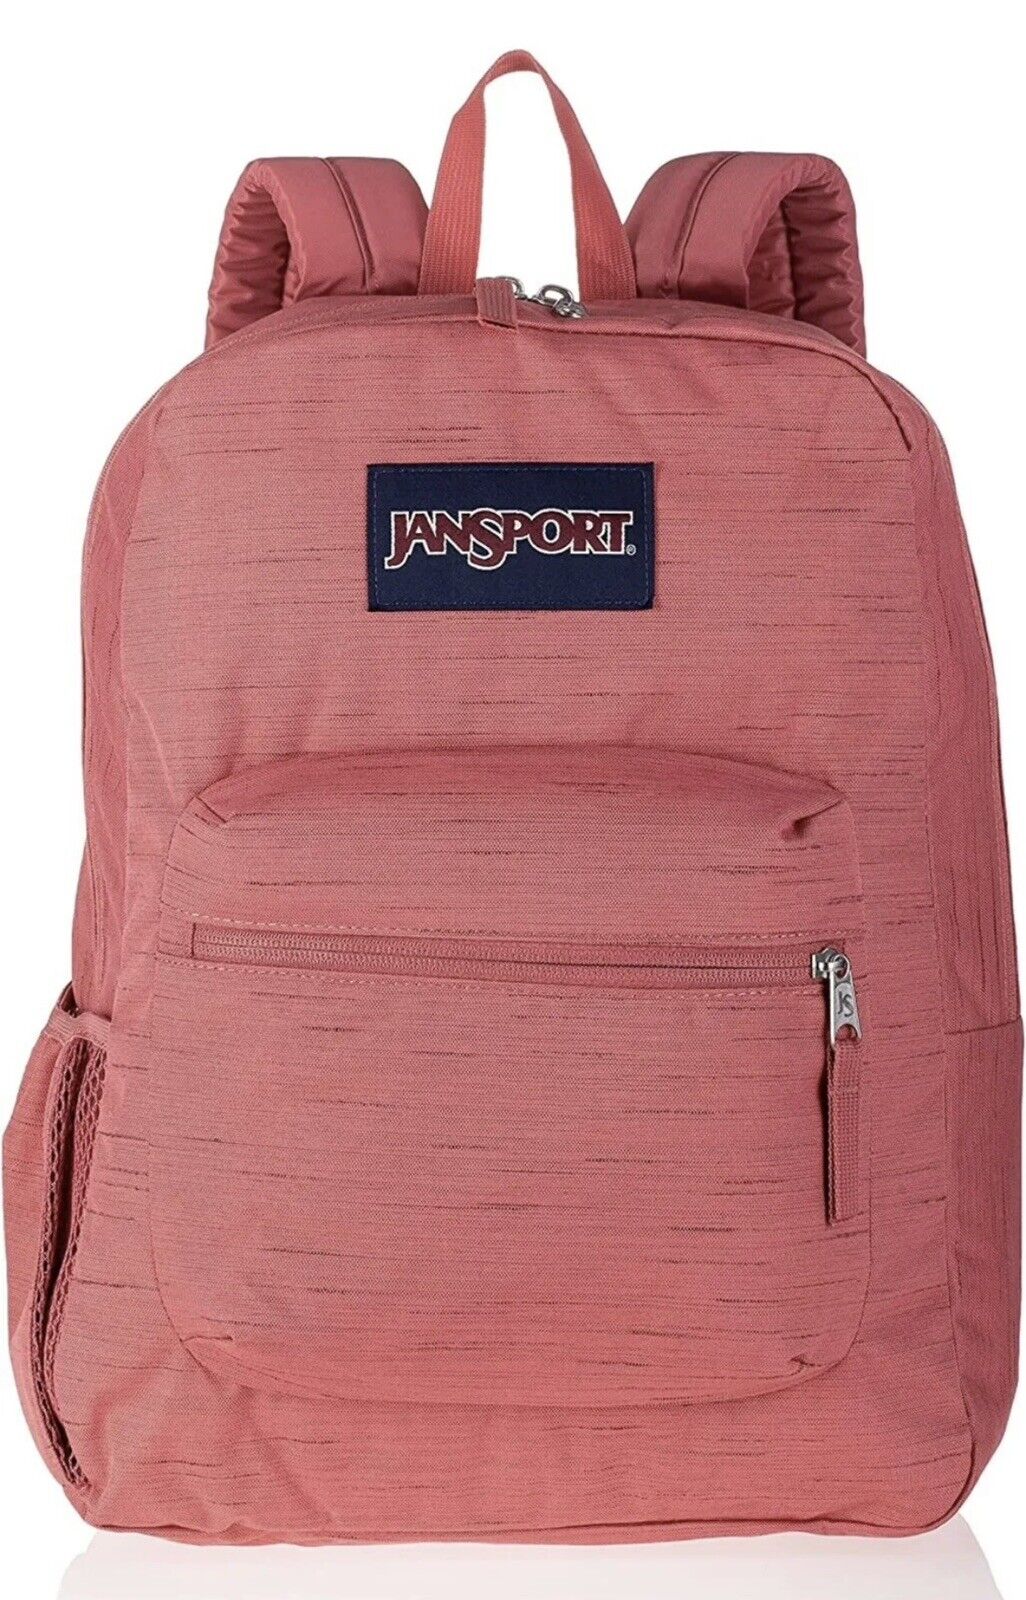 JANSPORT CROSS TOWN REMIX SLATE ROSE SLUB LAPTOP BACKPACK Pink School Bookbag